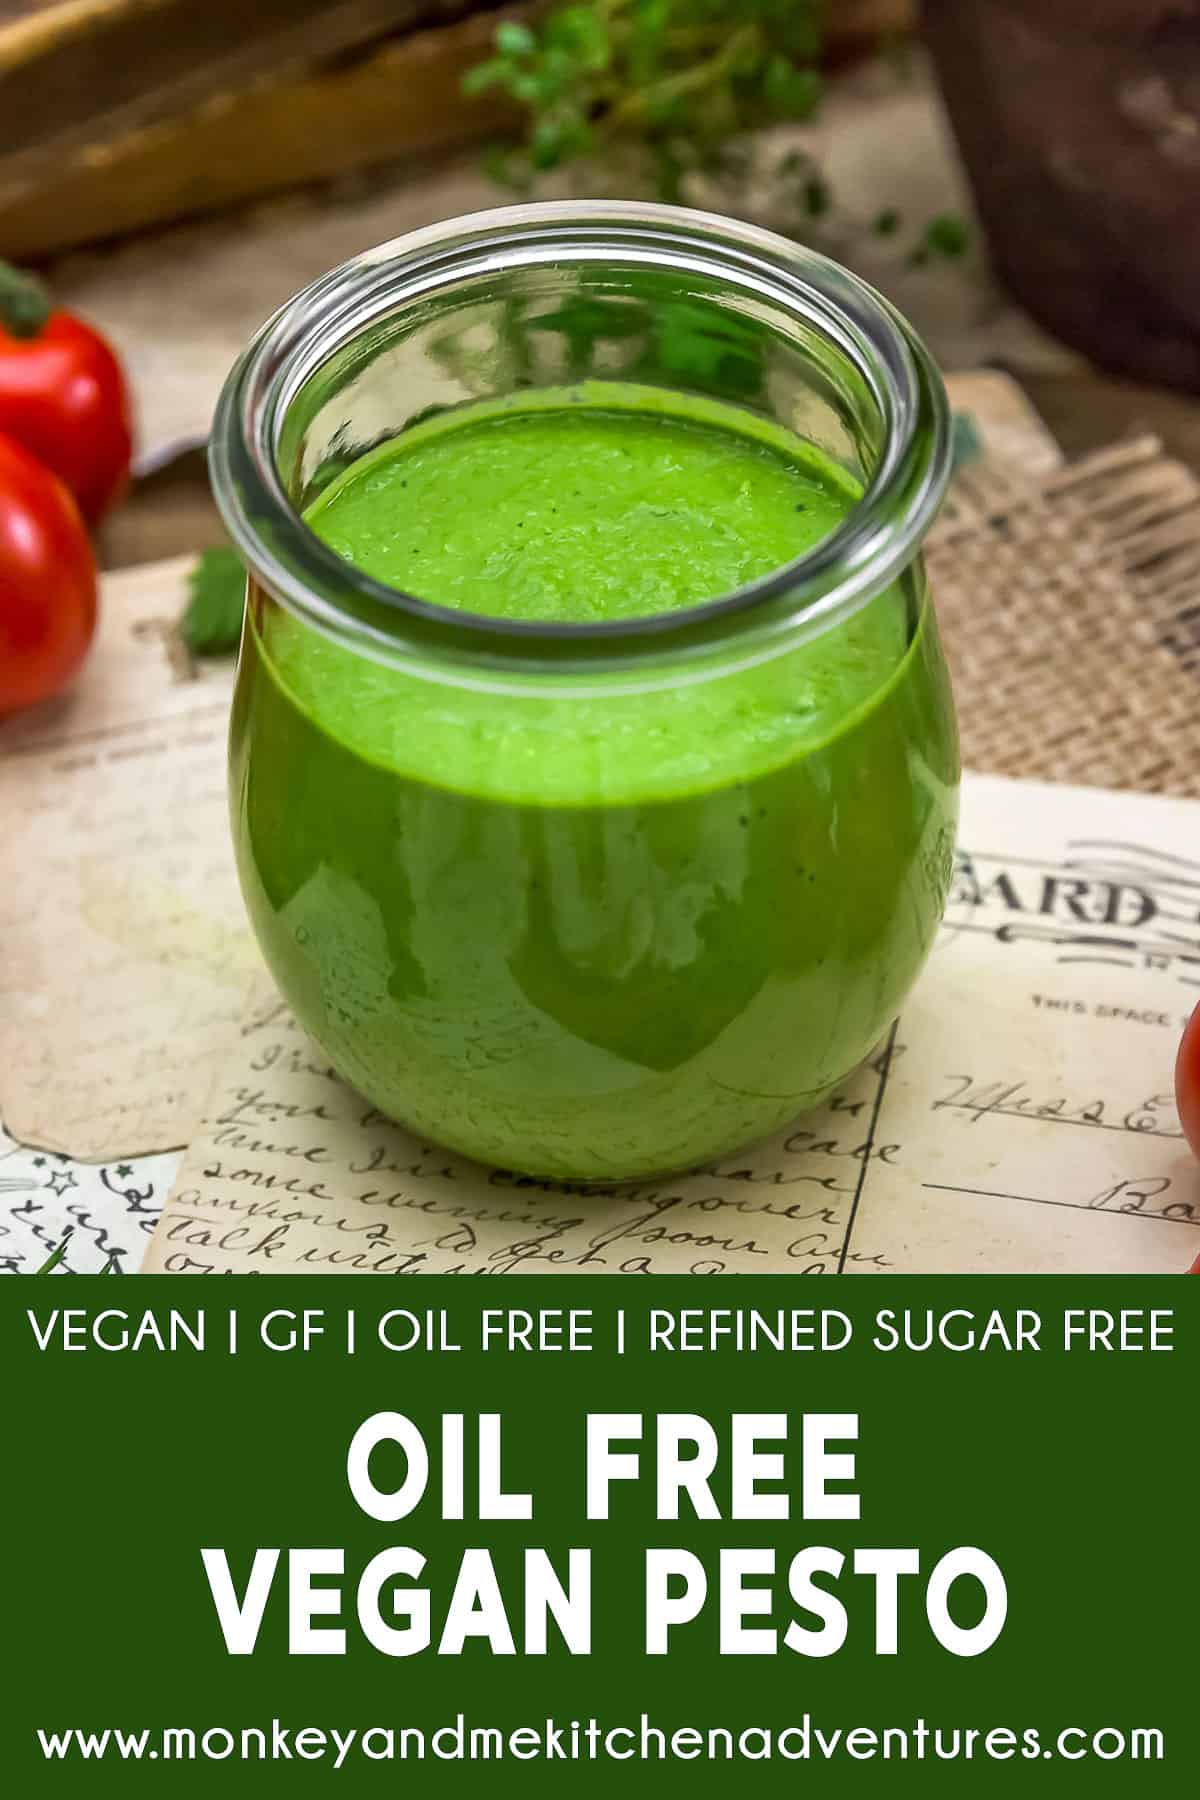 Oil Free Vegan Pesto with text description